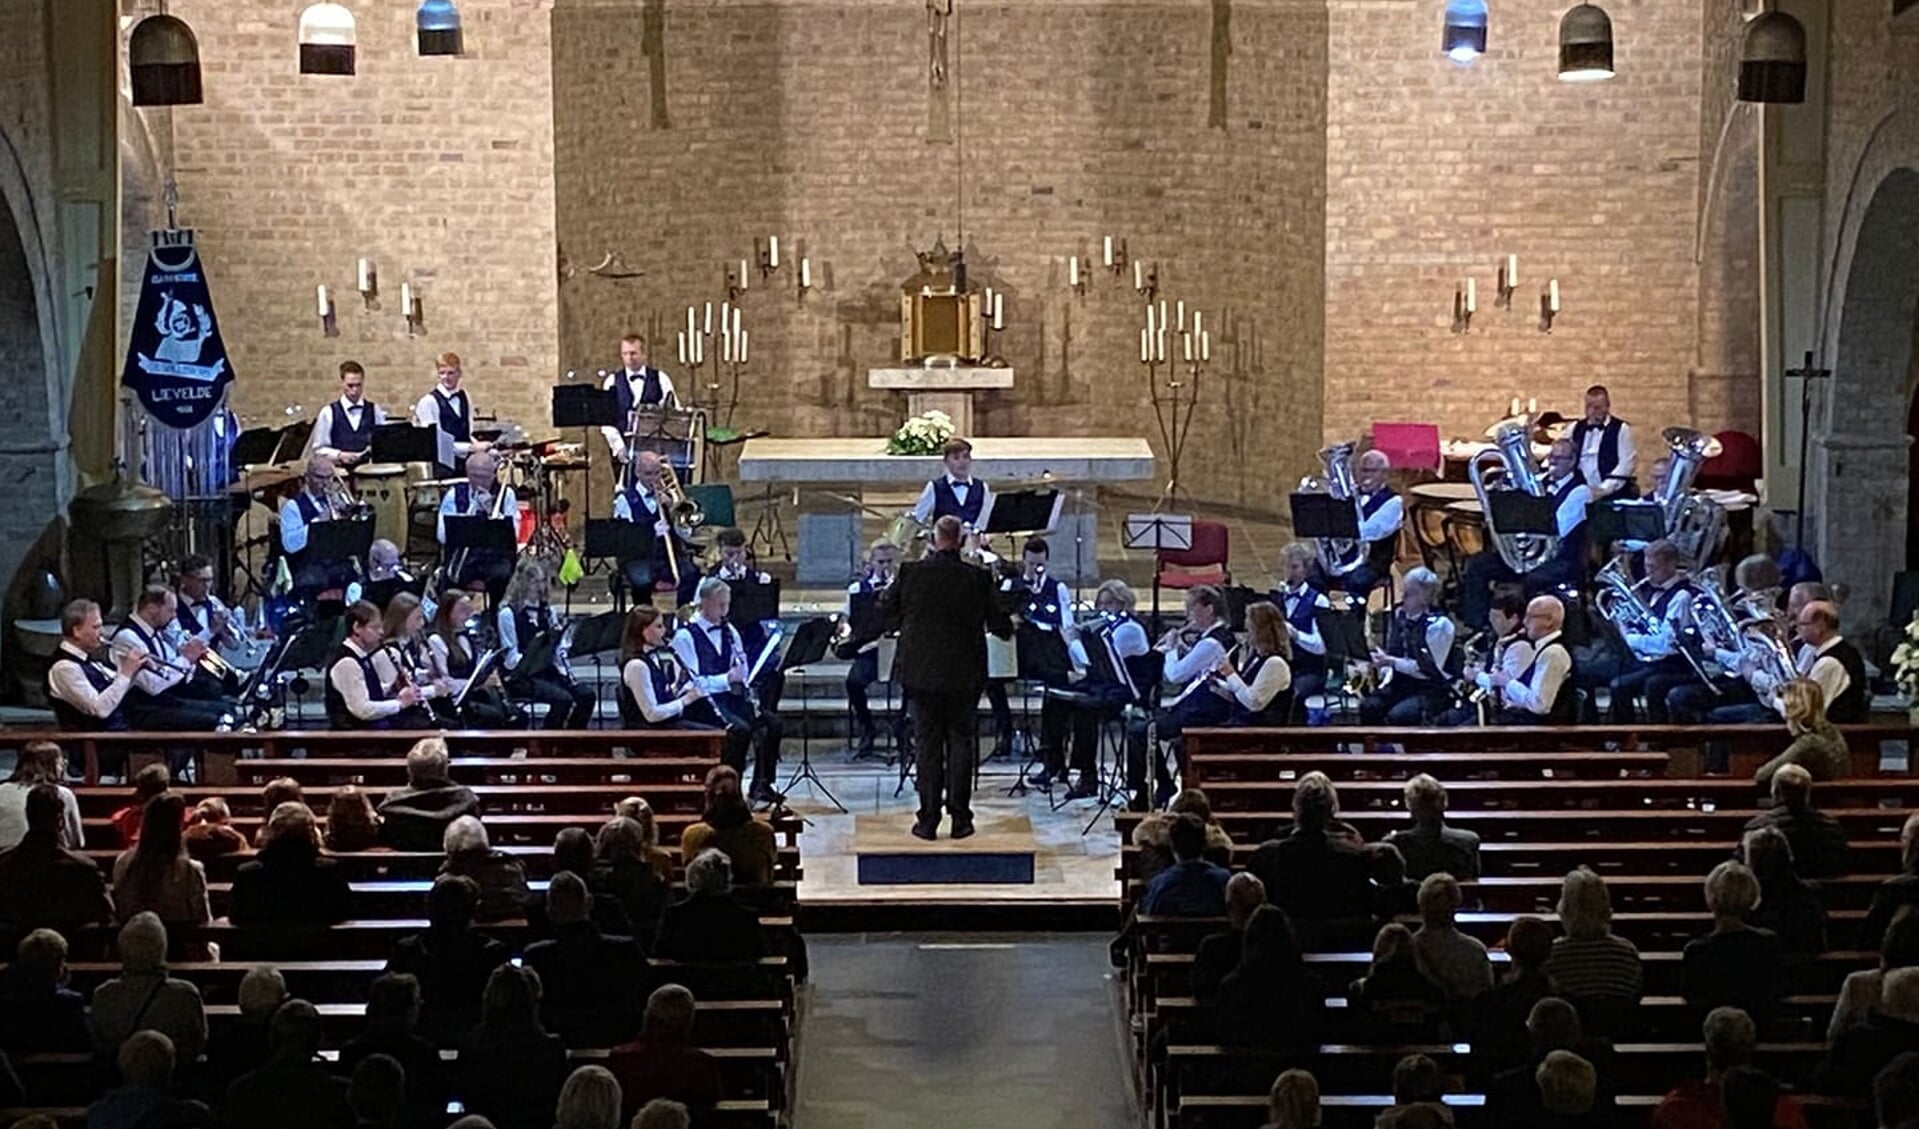 Concert van Harmonie St. Willibrord in de Christus Koningkerk in Lievelde. Foto: PR St. Willibrord